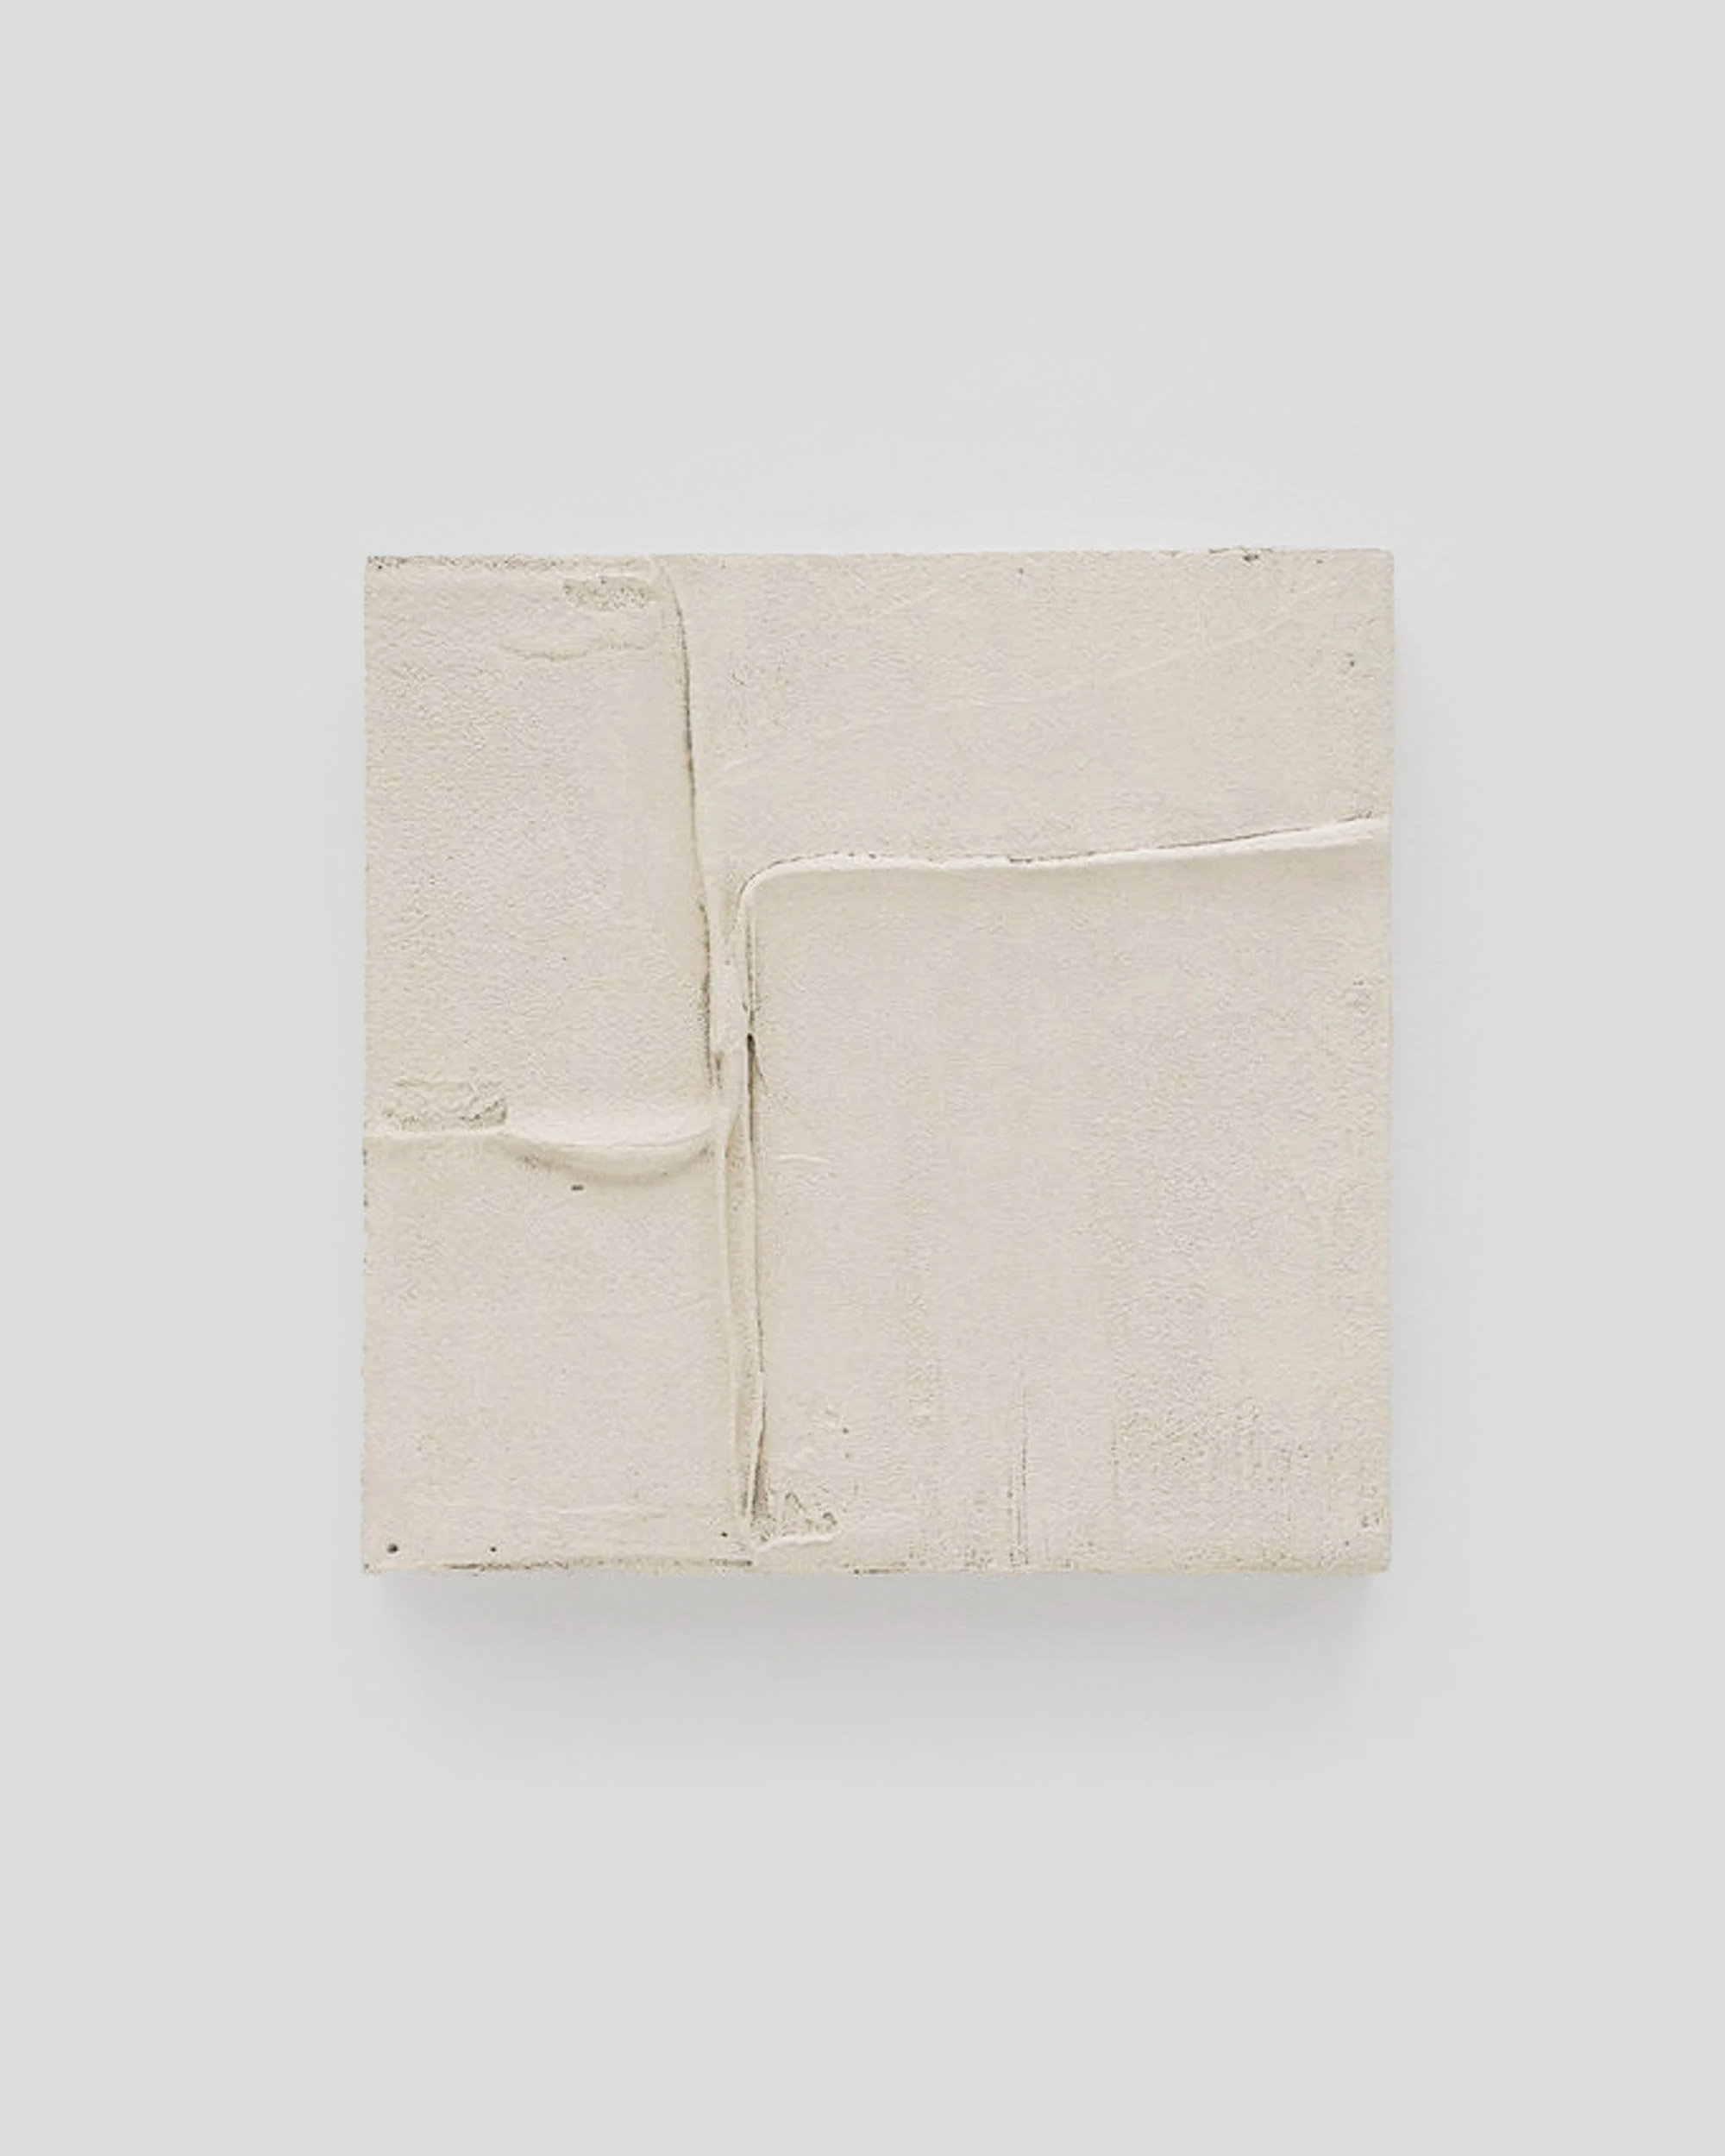 Antonia Ferrer, 22/72 Tríptico Cuerdas, 2022, Mixed media on wood, 40 × 40 × 5 cm © The Artist, Image Courtesy Alzueta Gallery